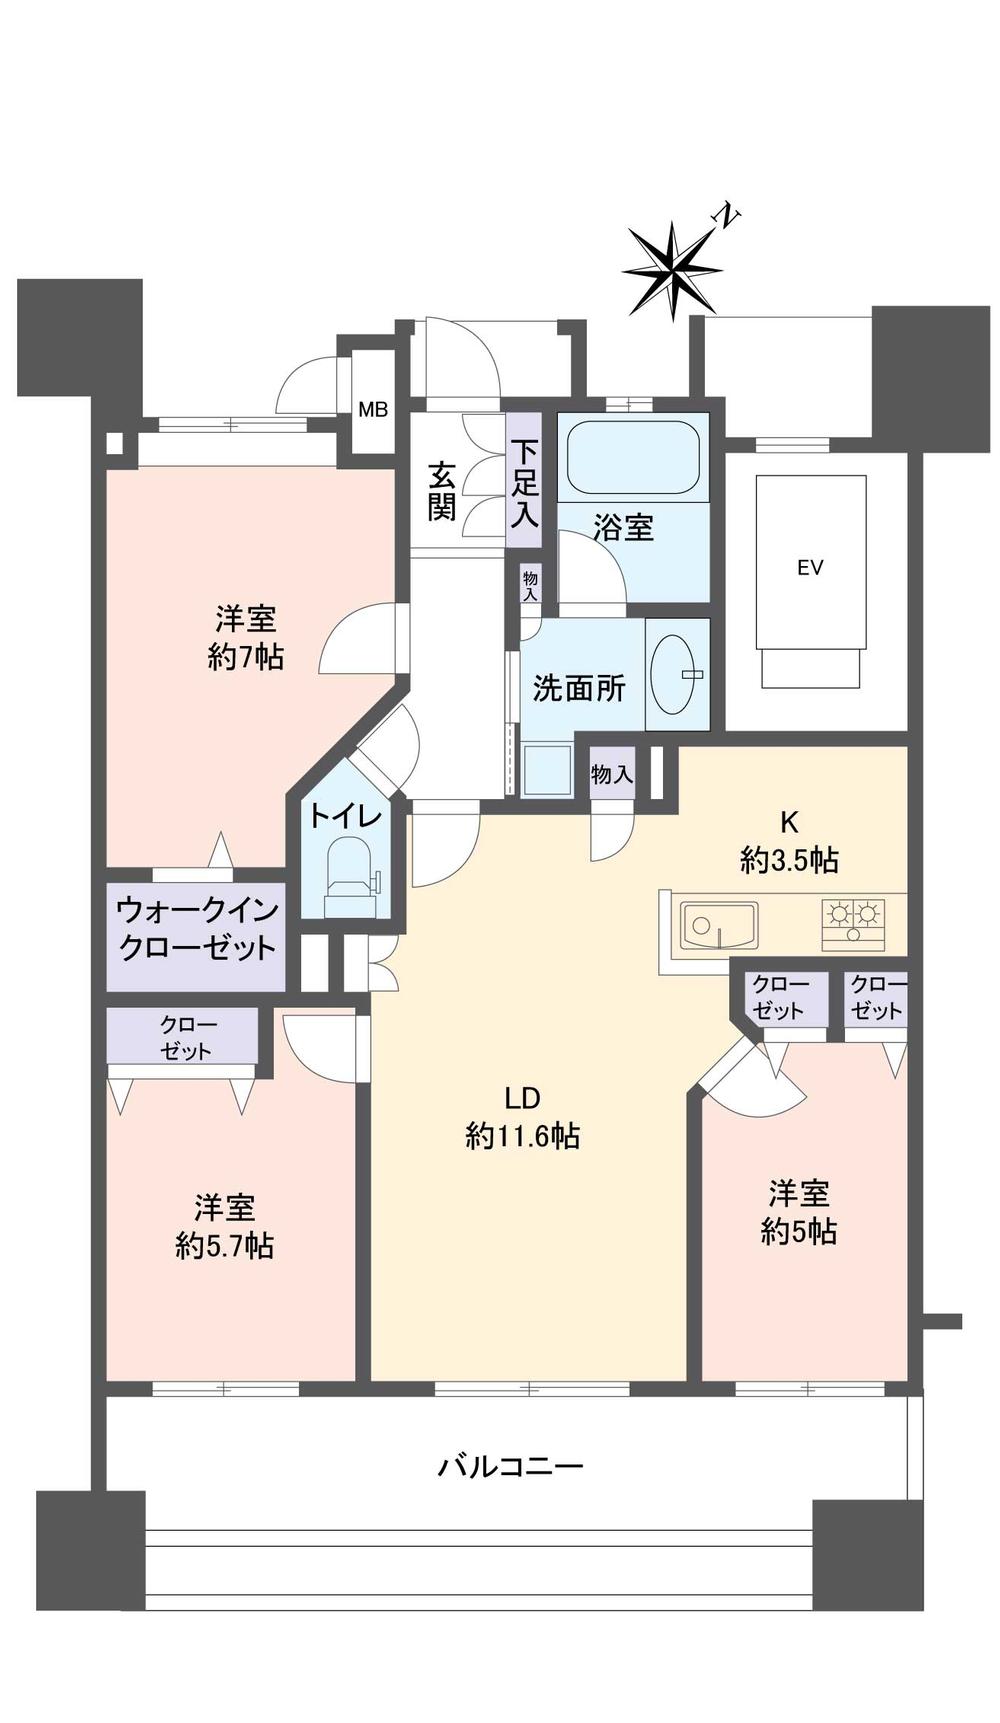 Floor plan. 3LDK, Price 15.8 million yen, Occupied area 73.23 sq m , Balcony area 16.6 sq m